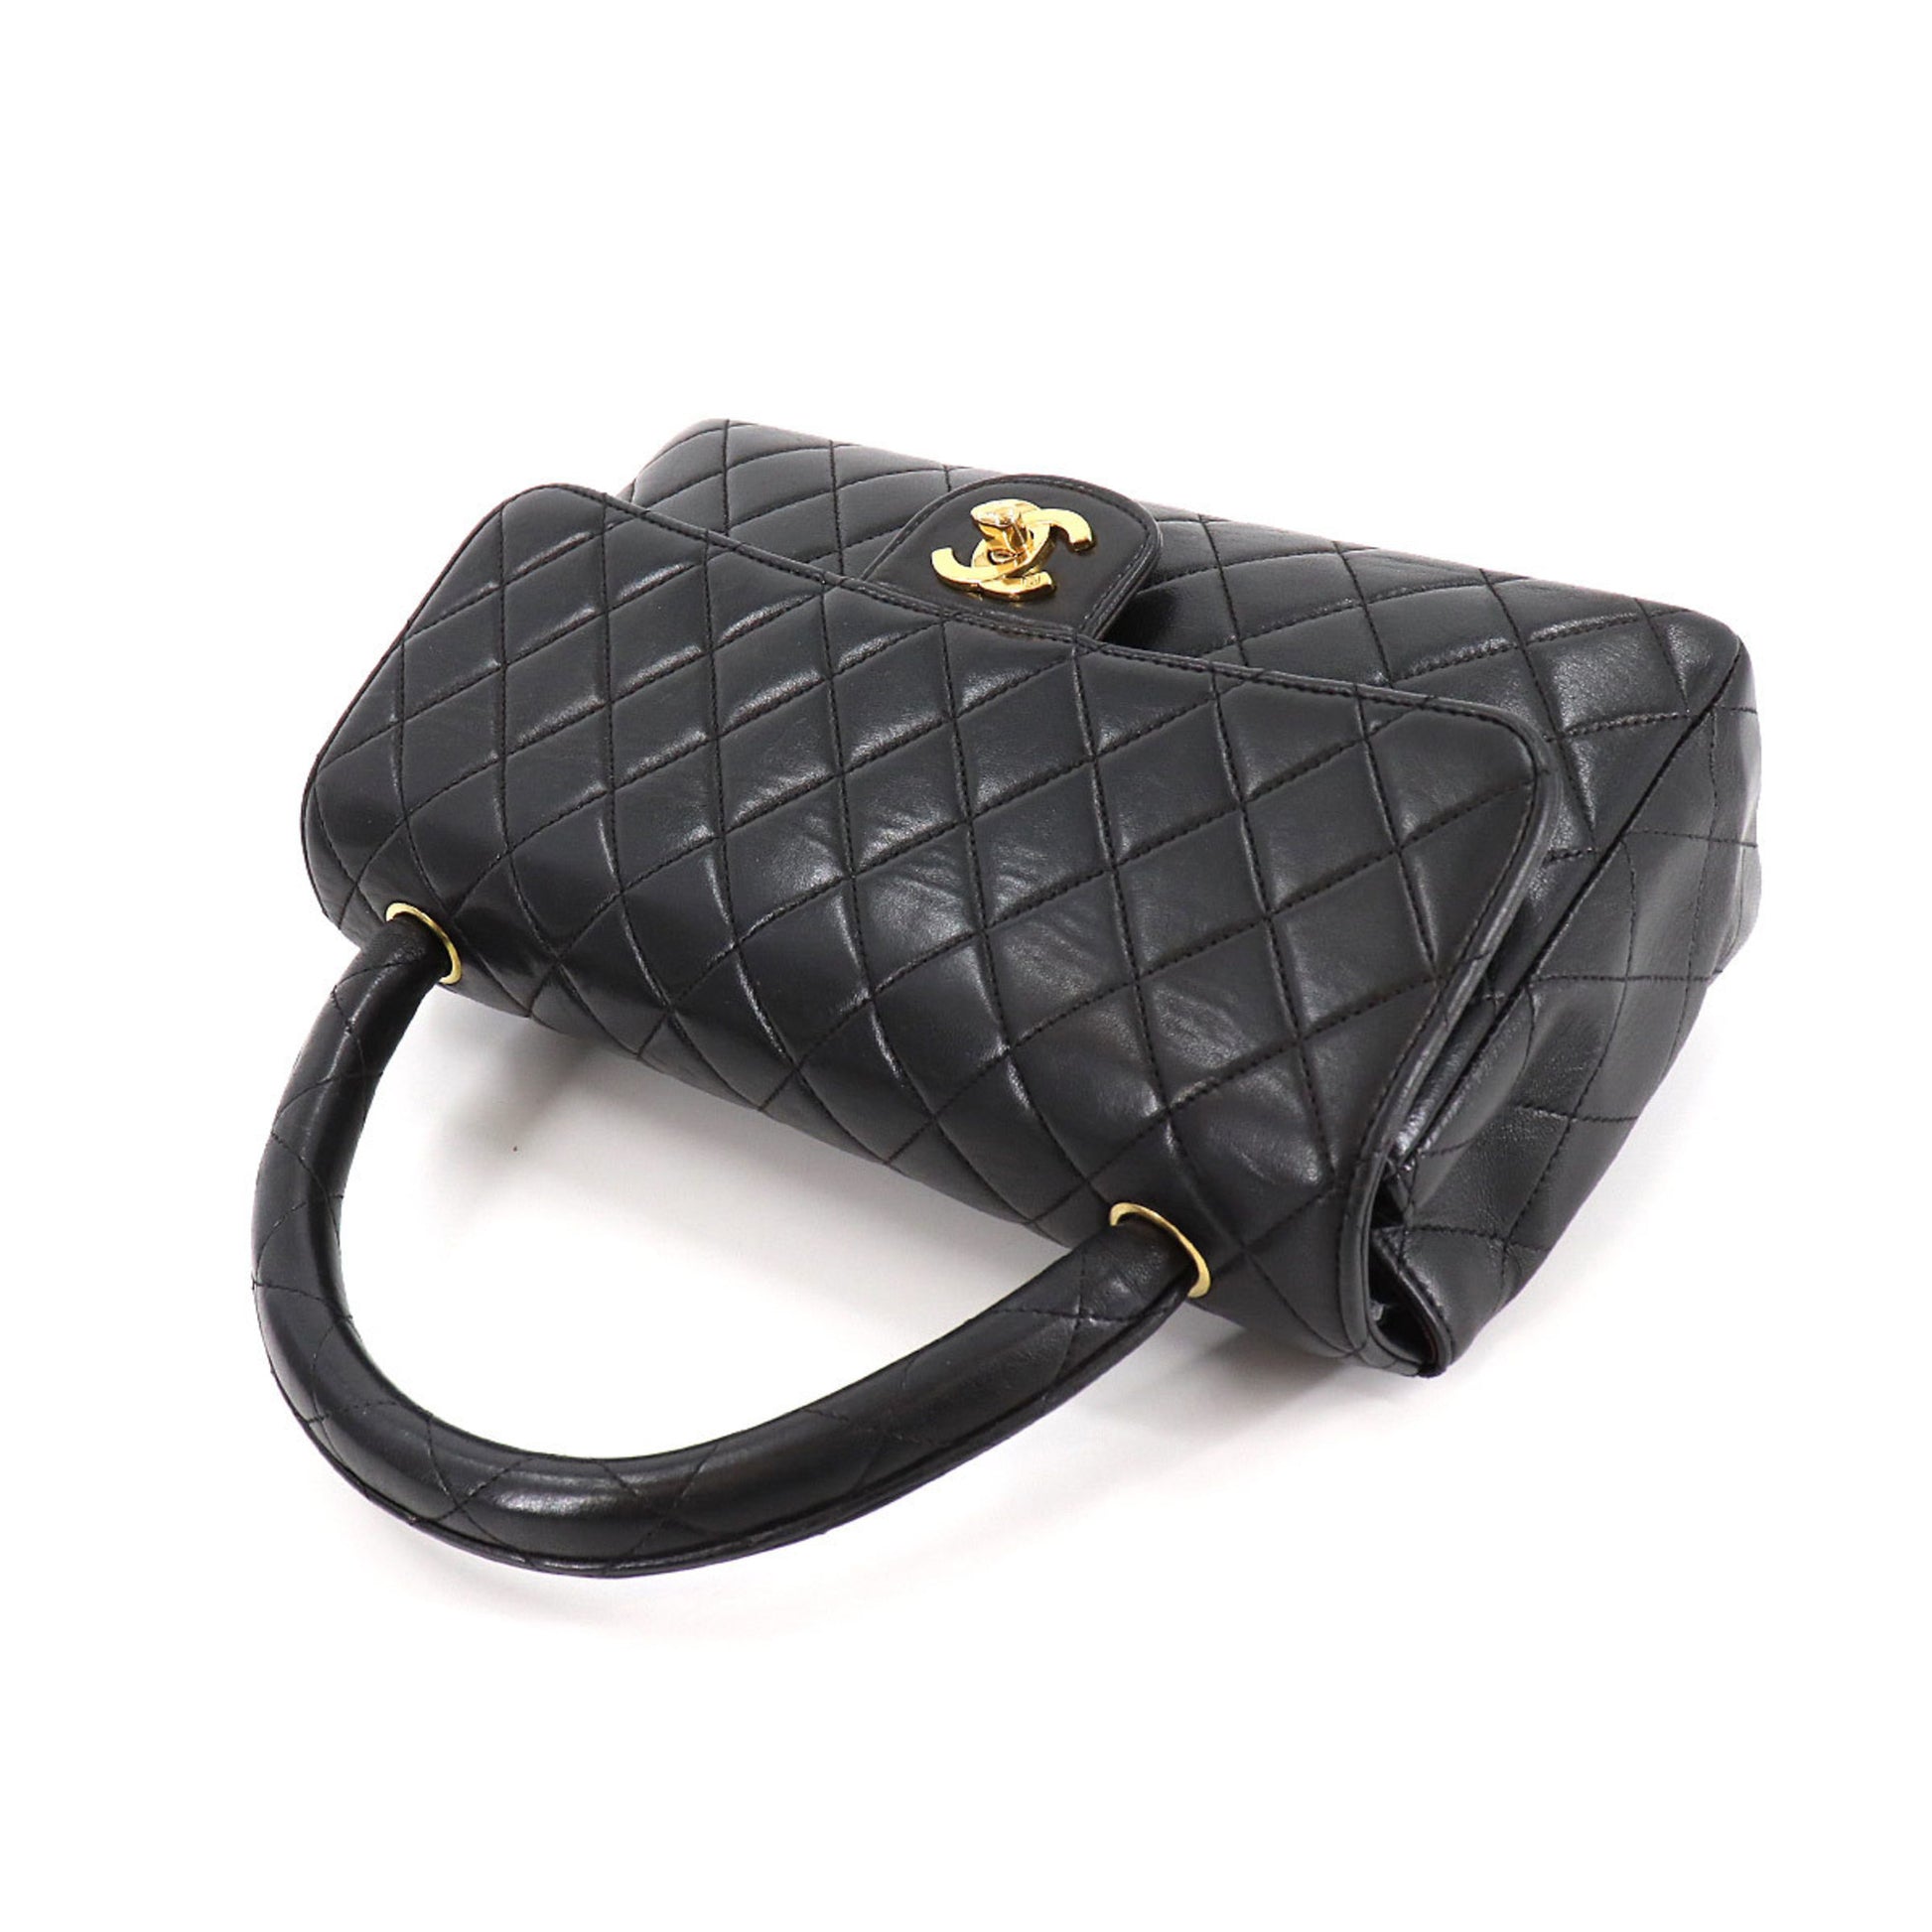 Chanel Chanel Matelasse Handbag Parent And Child Bag Only Leather Black  Auction